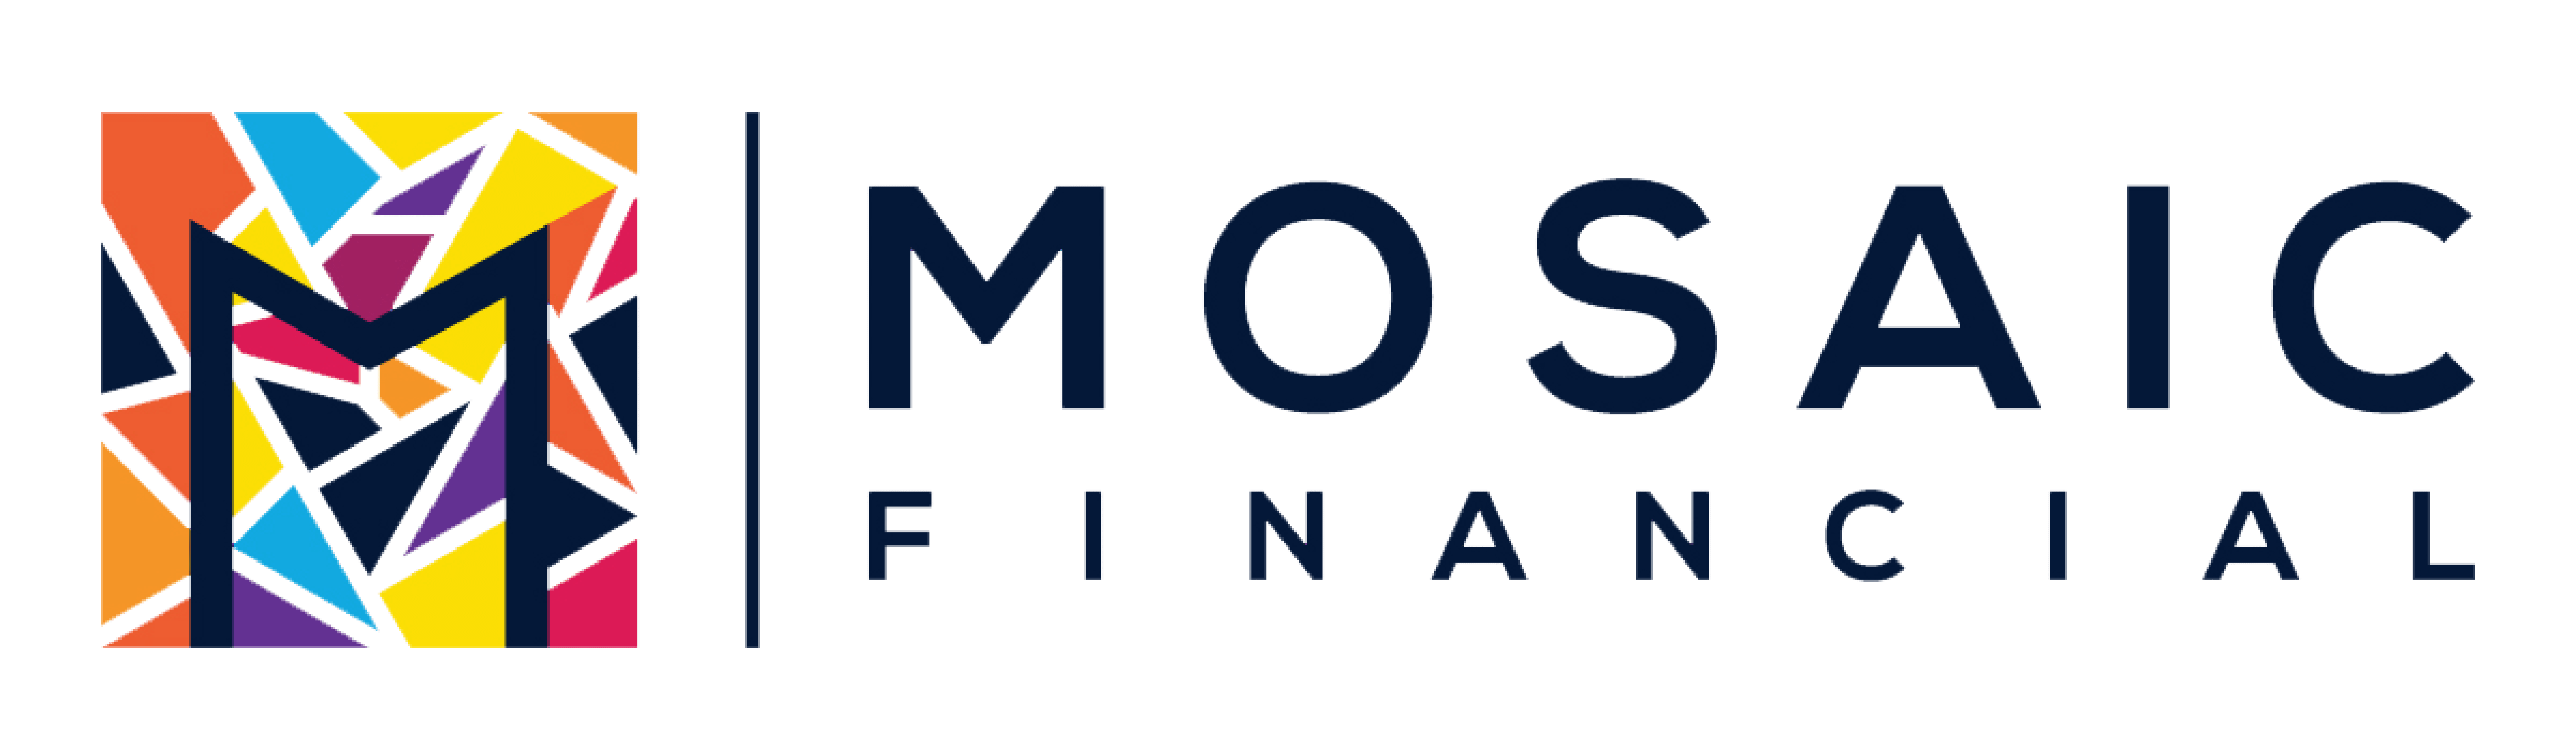 Mosaic Financial Advisers